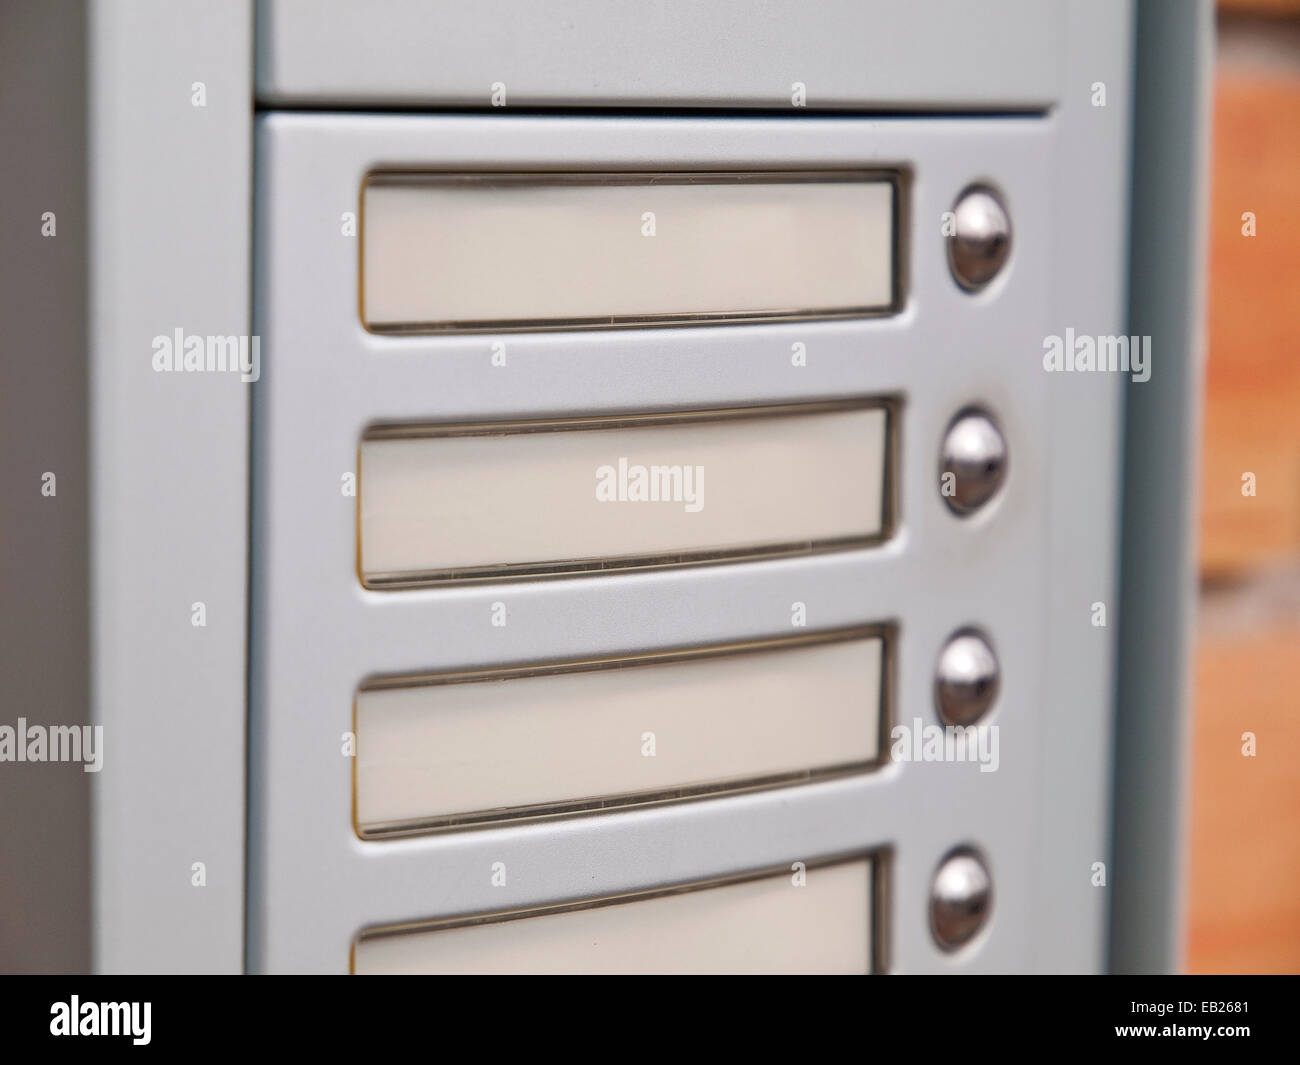 Doorbell ring panel Stock Photo